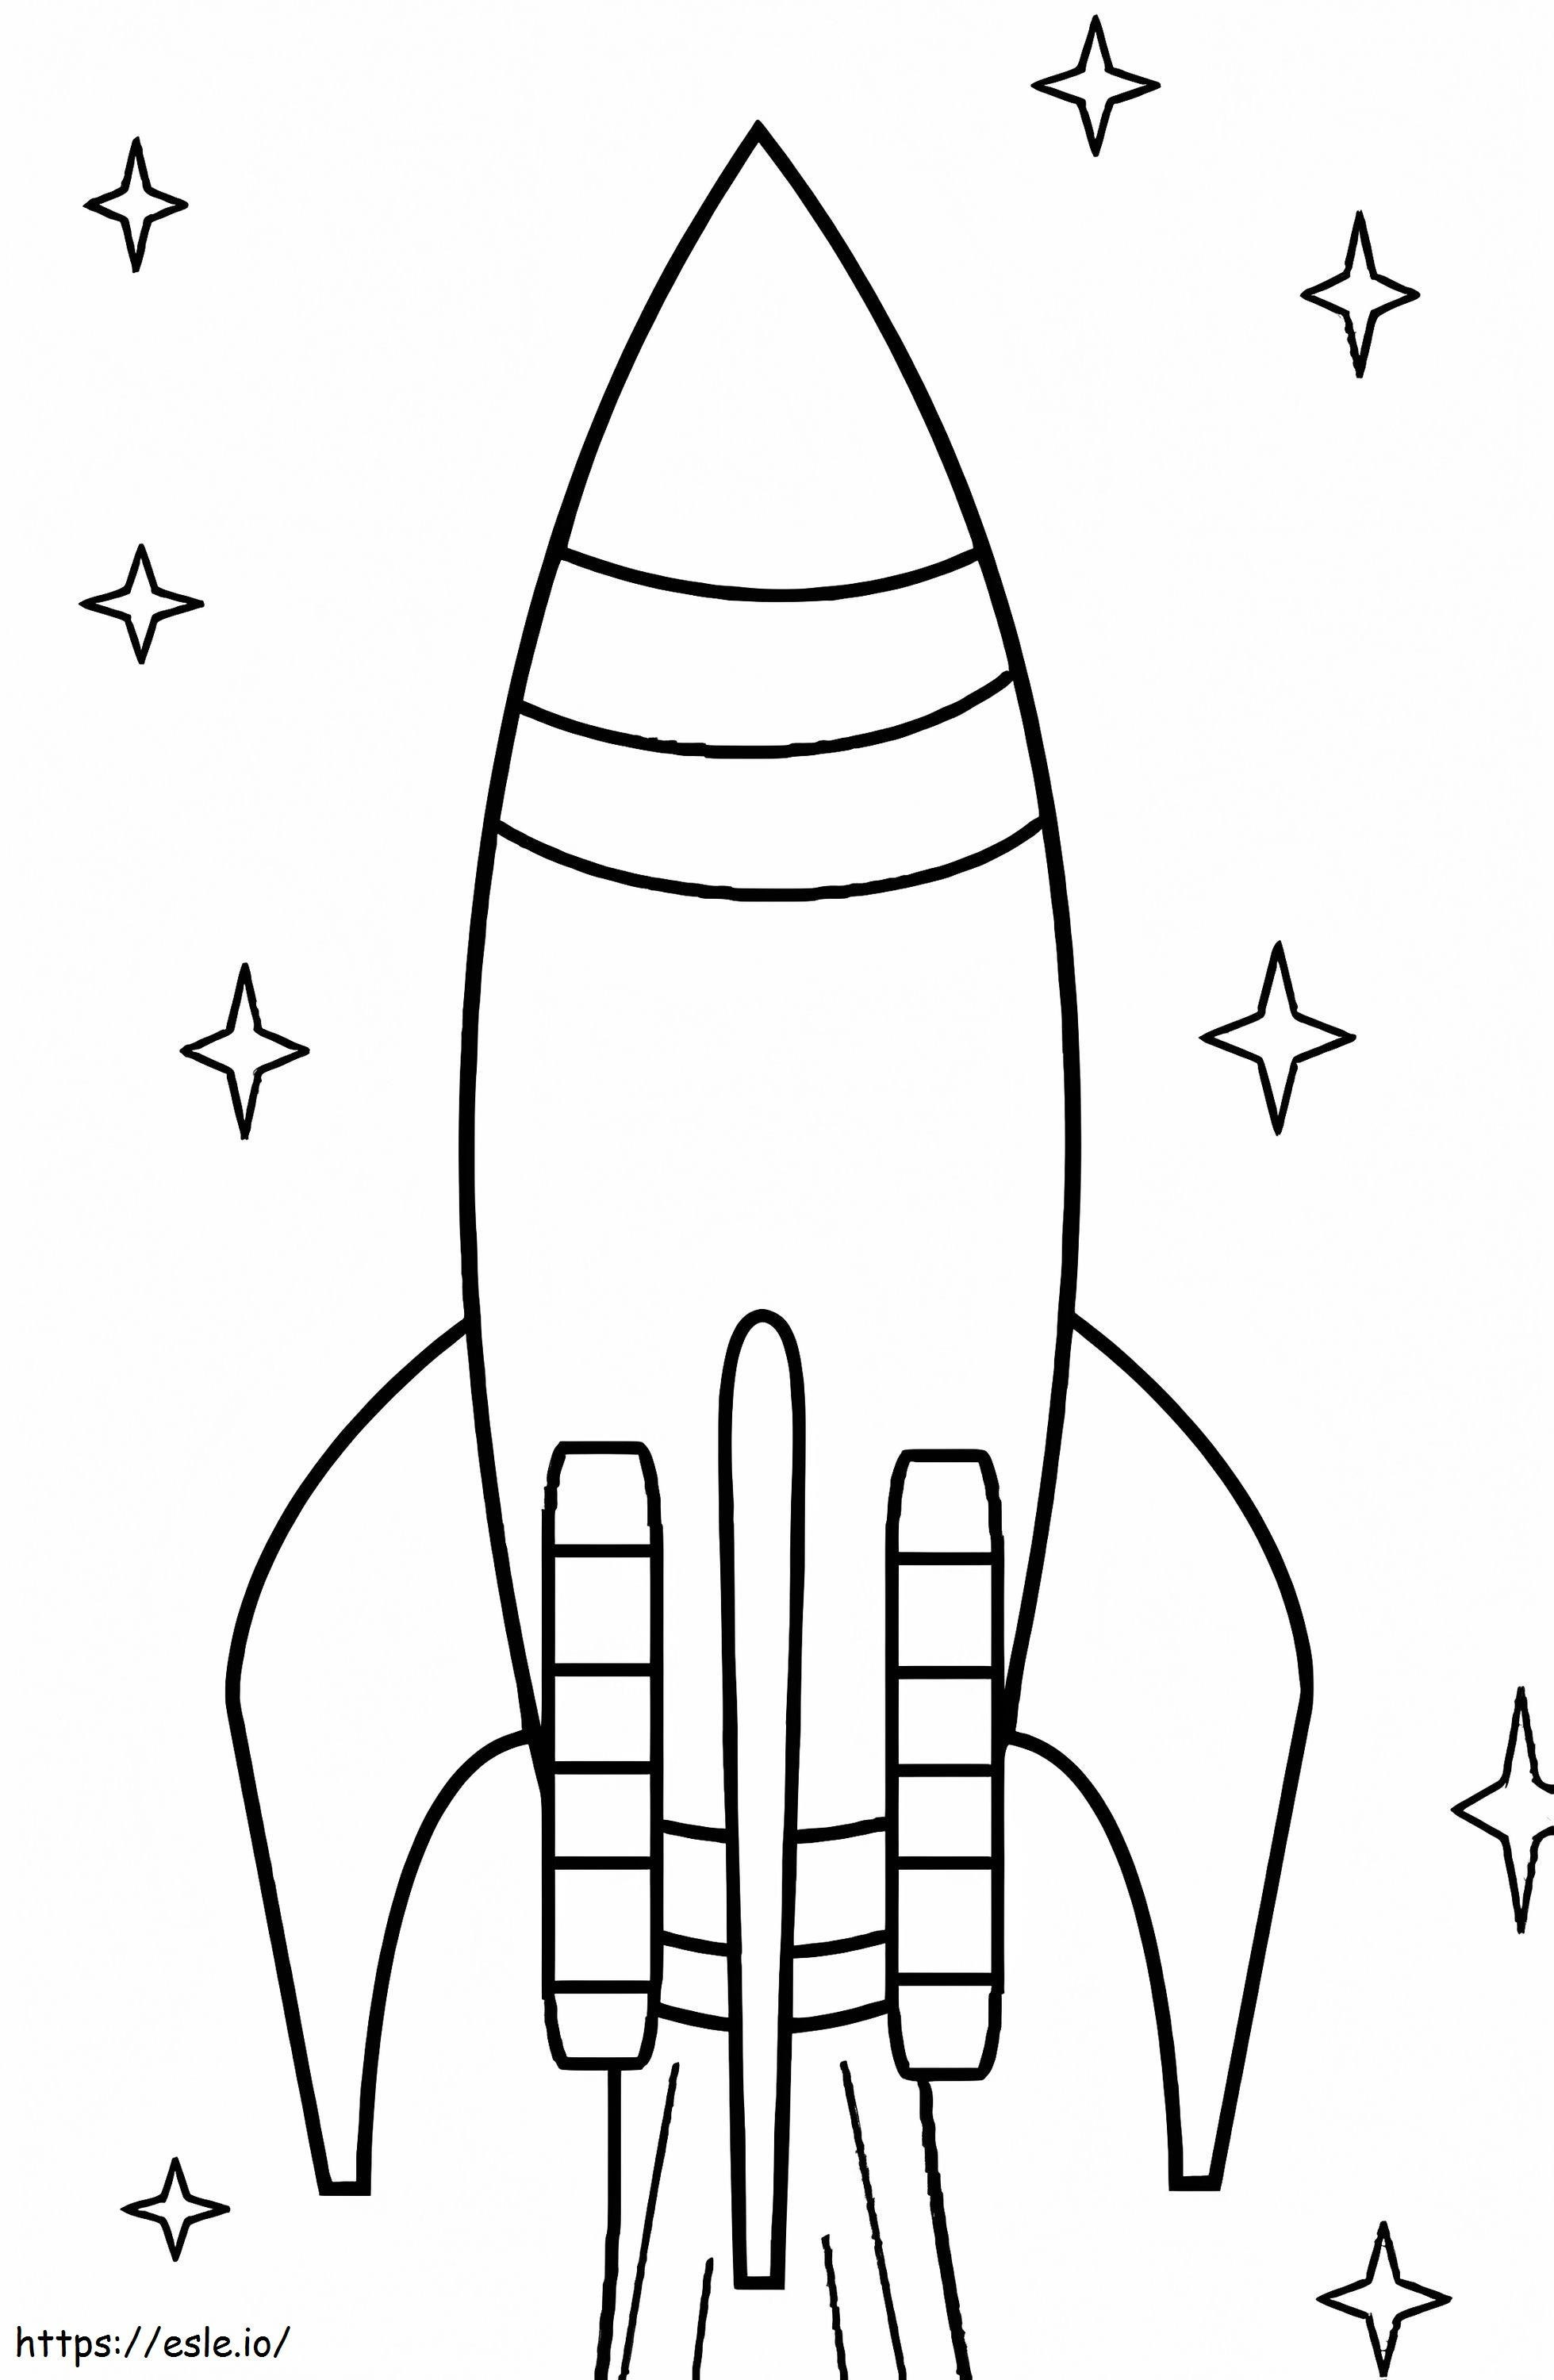 Rocket 3 coloring page